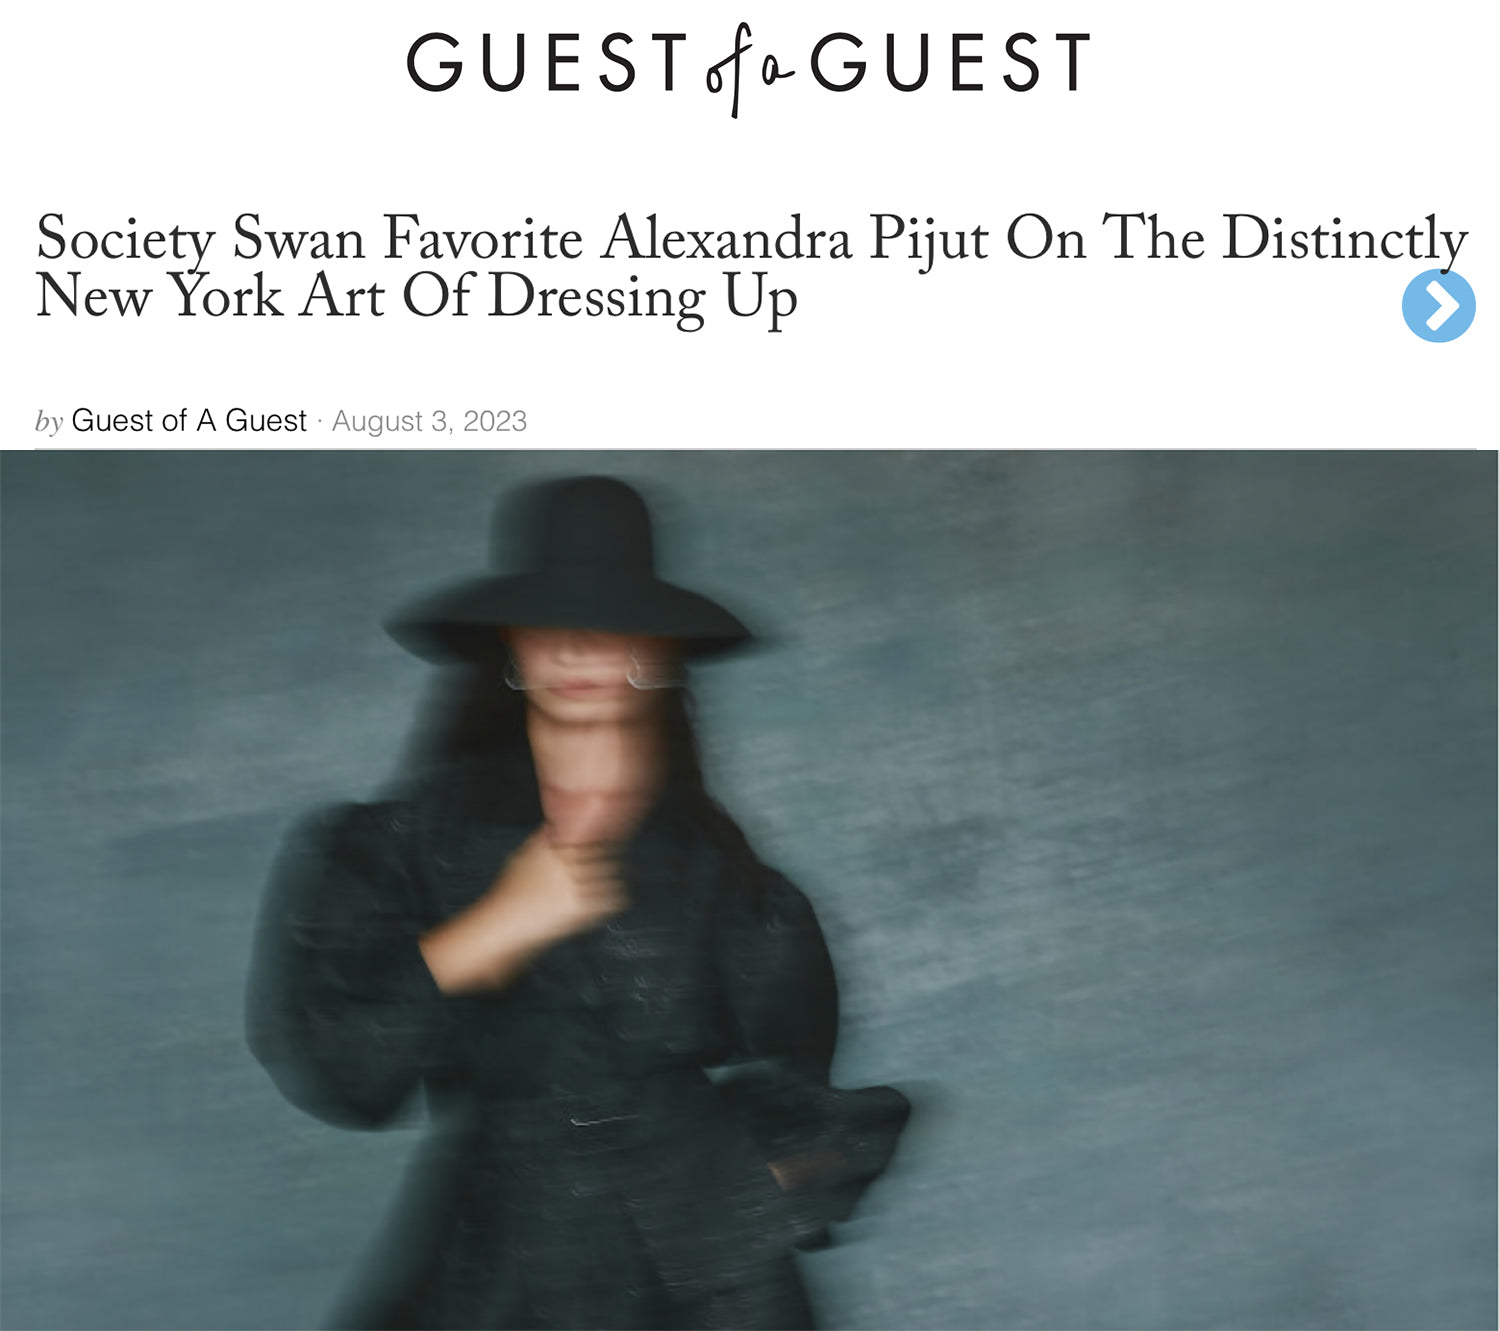 Society Swan Favorite Alexandra Pijut On The Distinctly New York Art Of Dressing Up